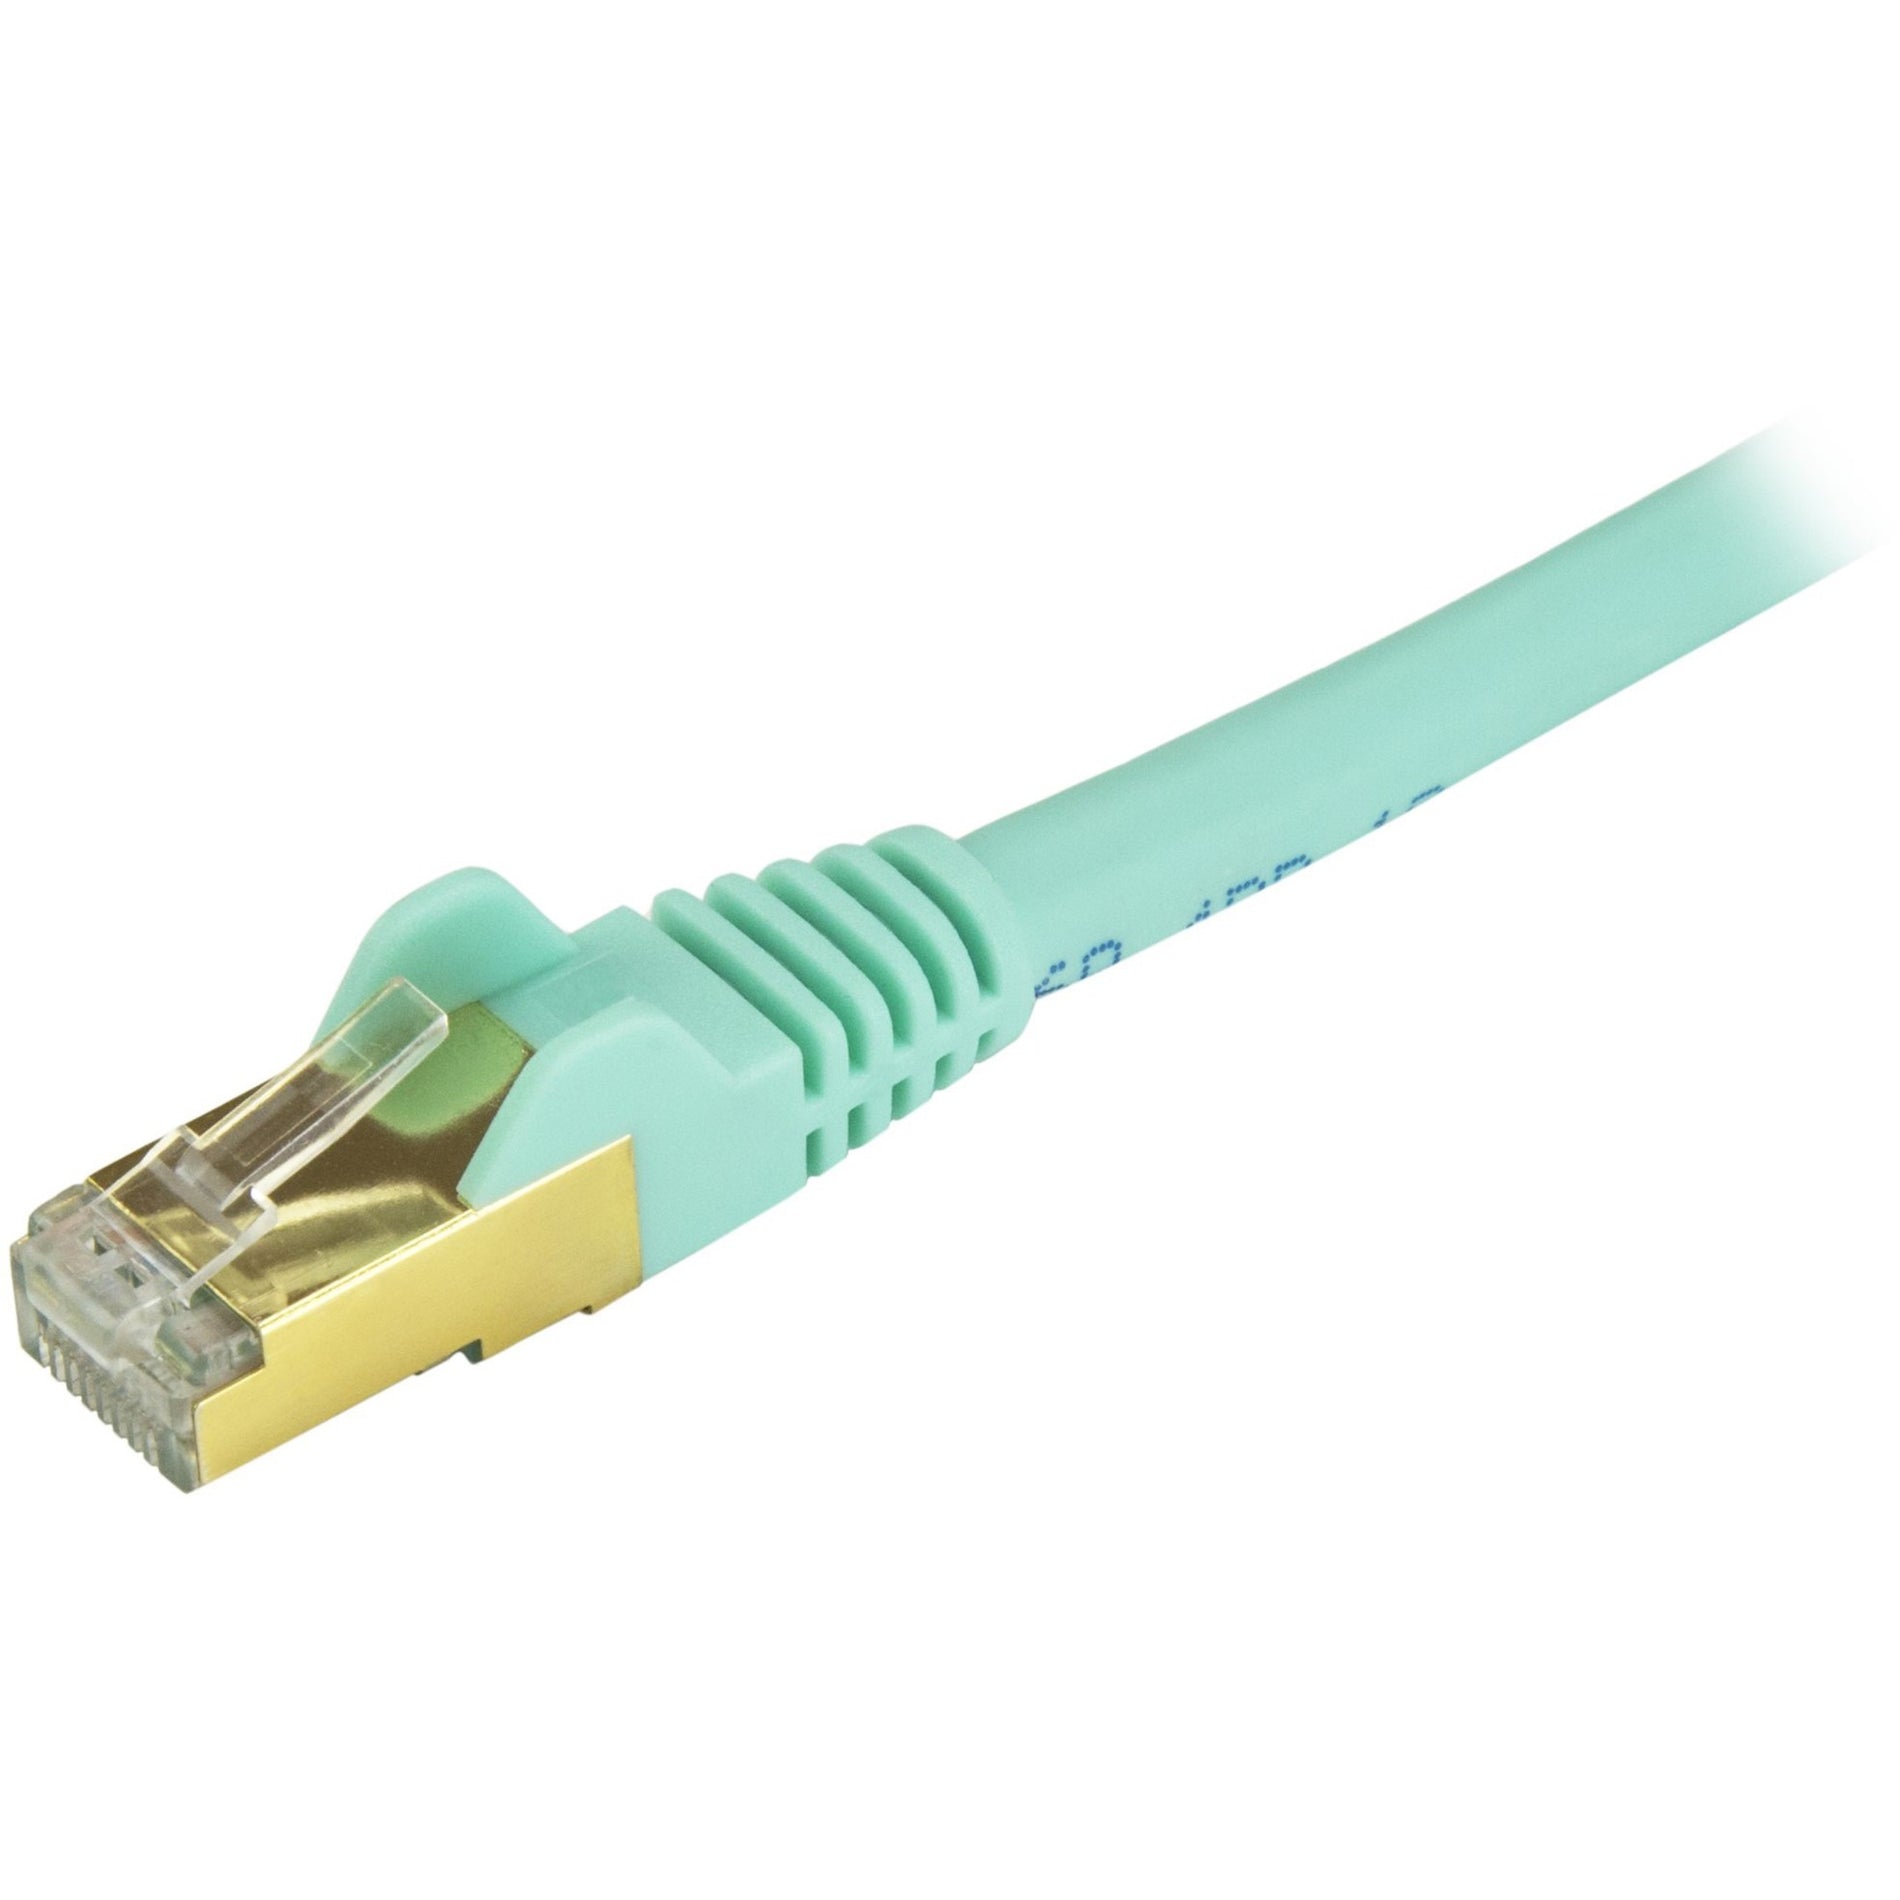 StarTech.com C6ASPAT4AQ Cat6a Ethernet Patch Cable - Shielded (STP) - 4 ft., Aqua, Snagless RJ45 Ethernet Cord